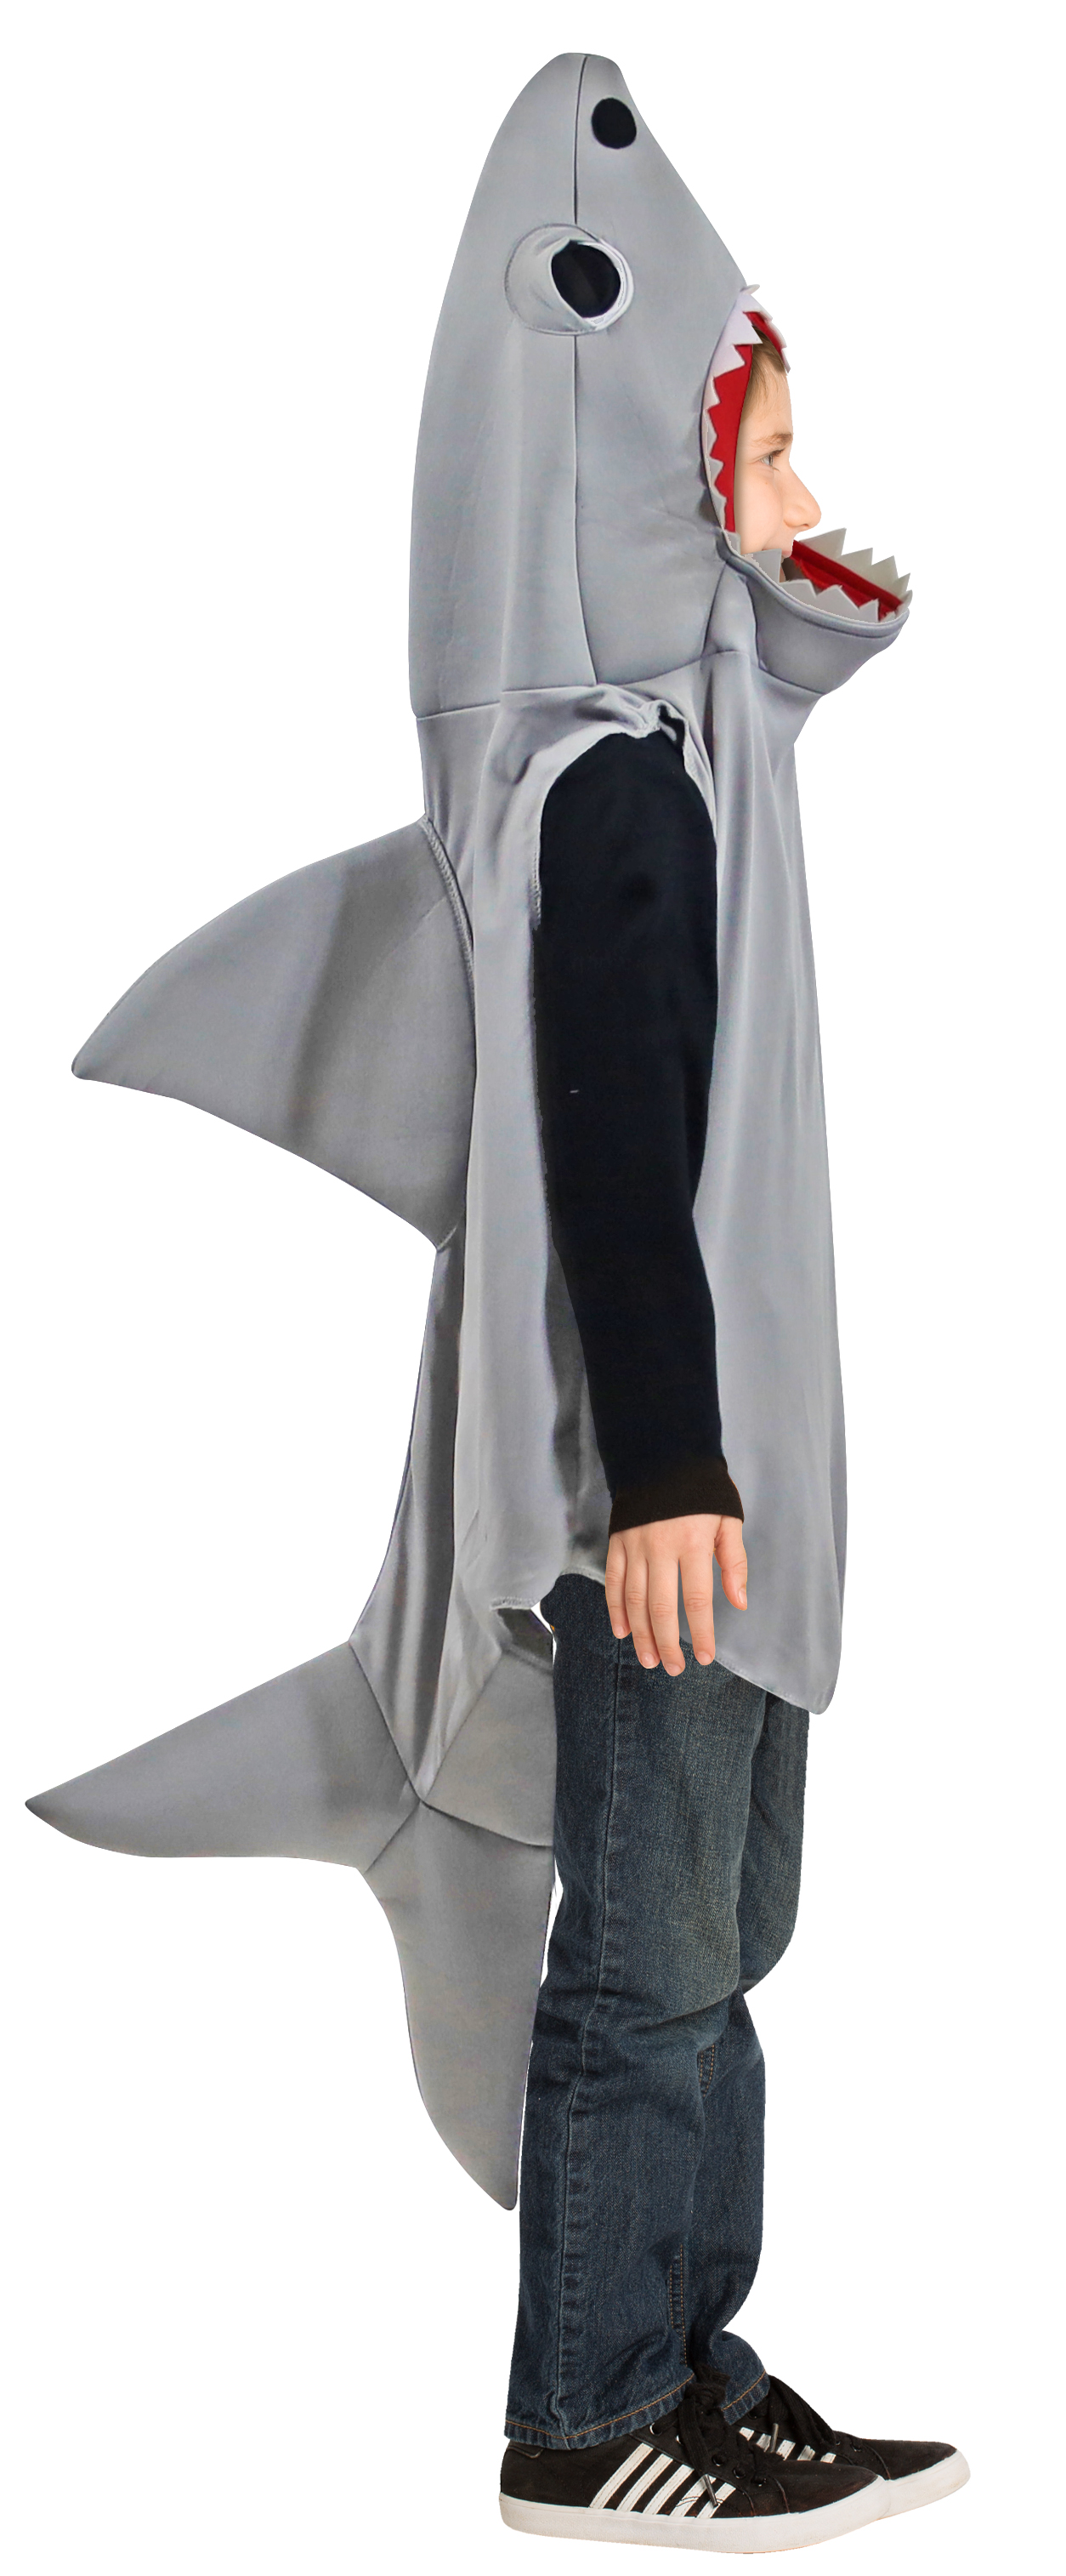 Rasta Imposta Sand Shark Halloween Costume, Unisex Child Size 7-10, Gray - image 3 of 4